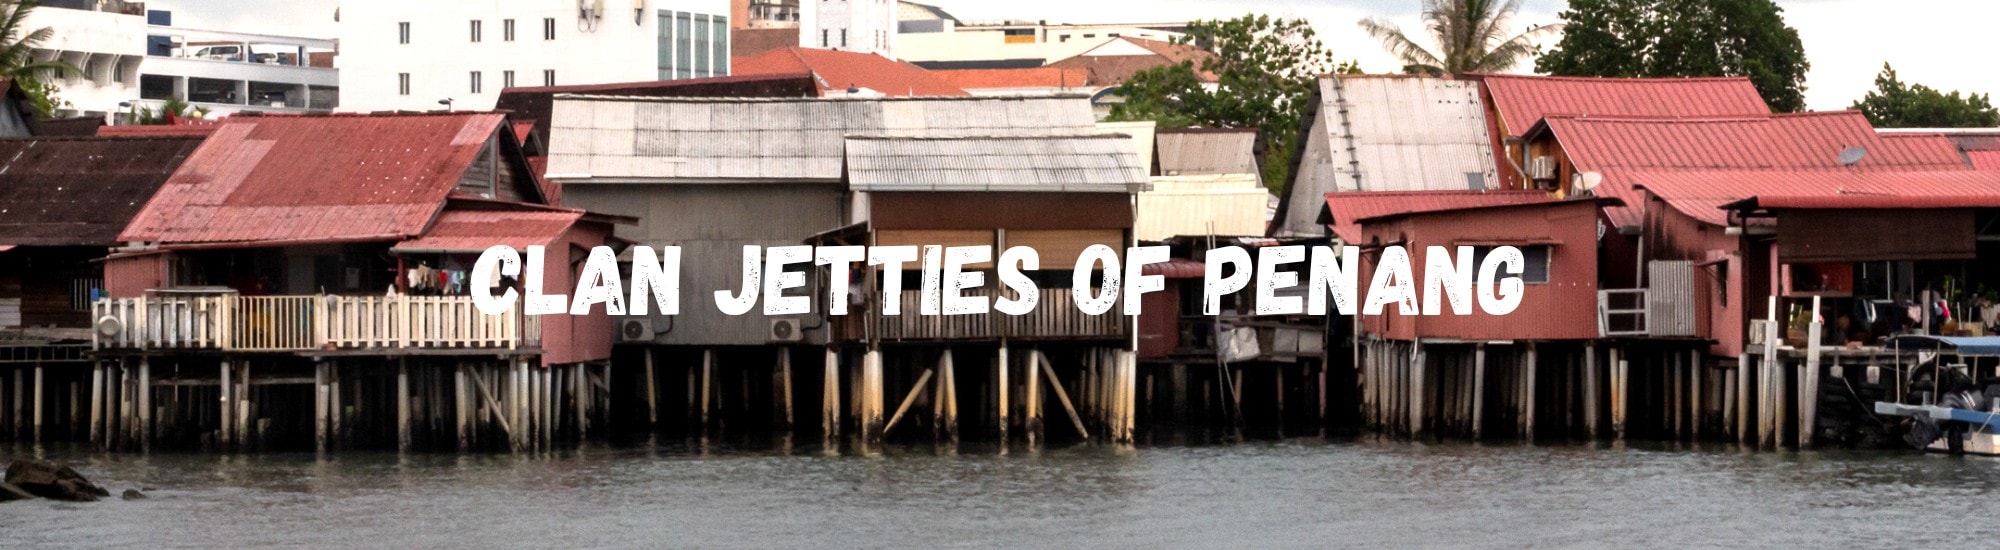 AA-Travel-Clan-Jetties-of-Penang-Banner